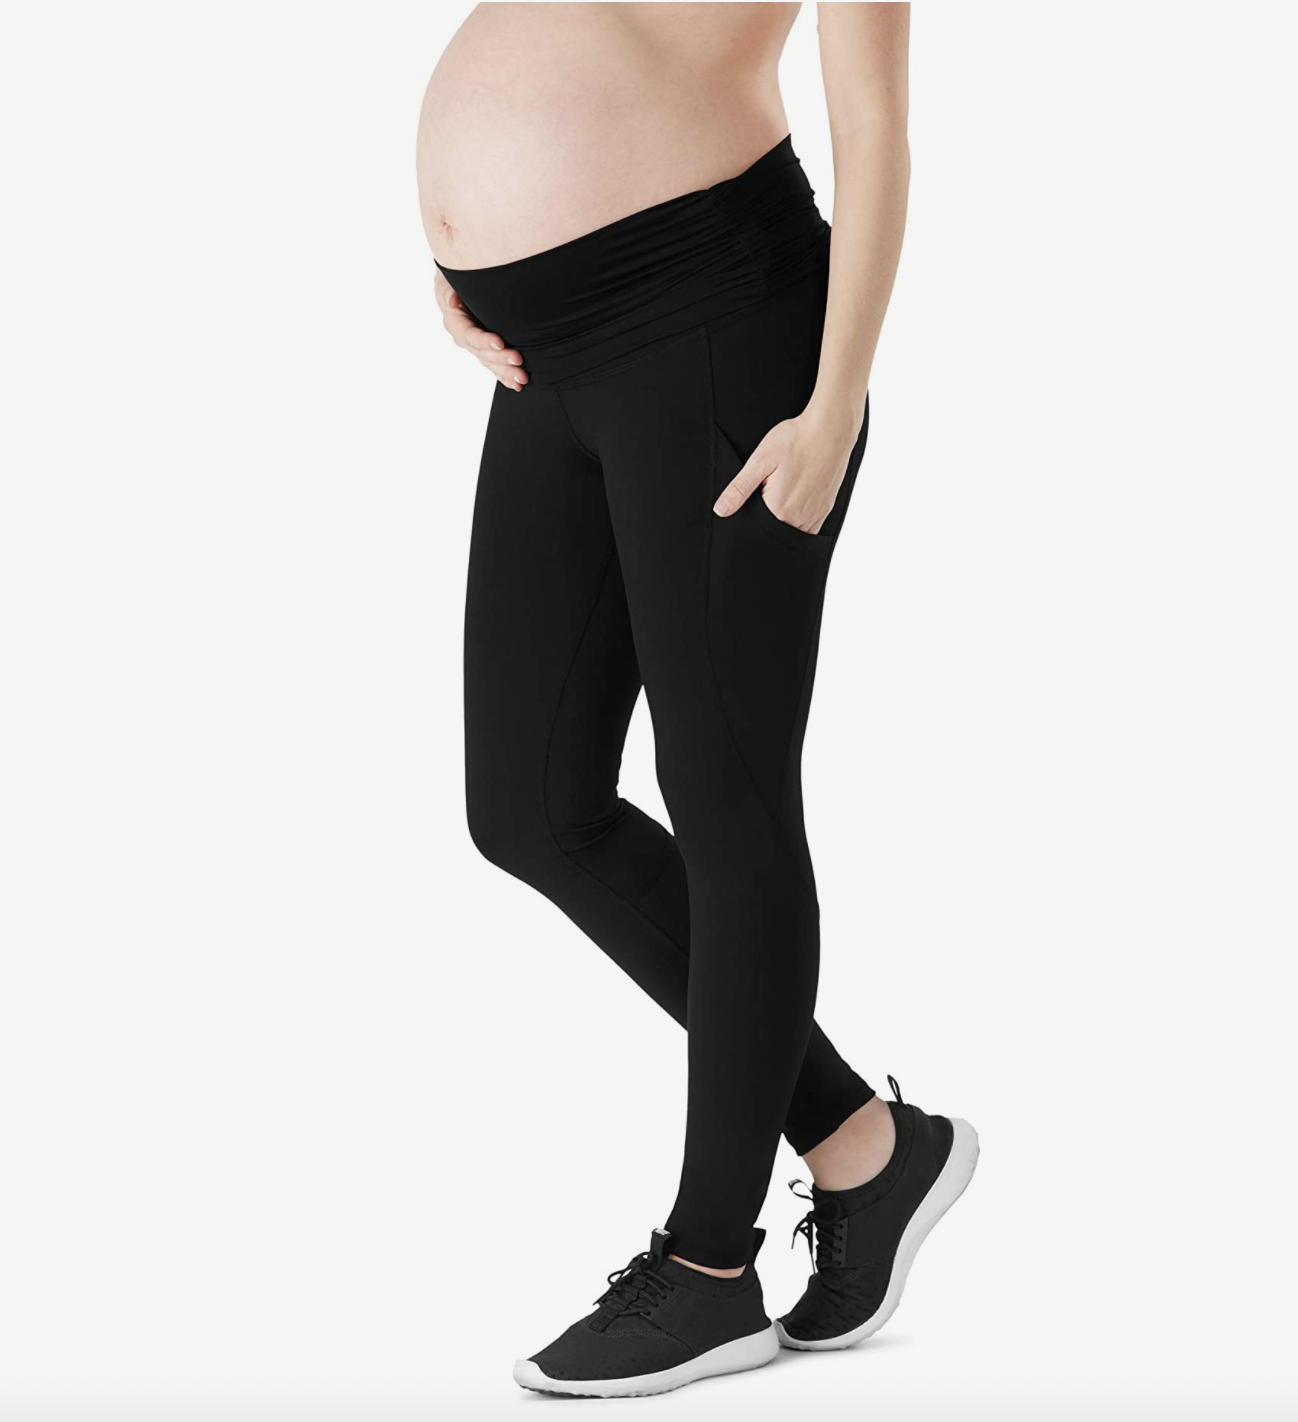 pregnant yoga pants